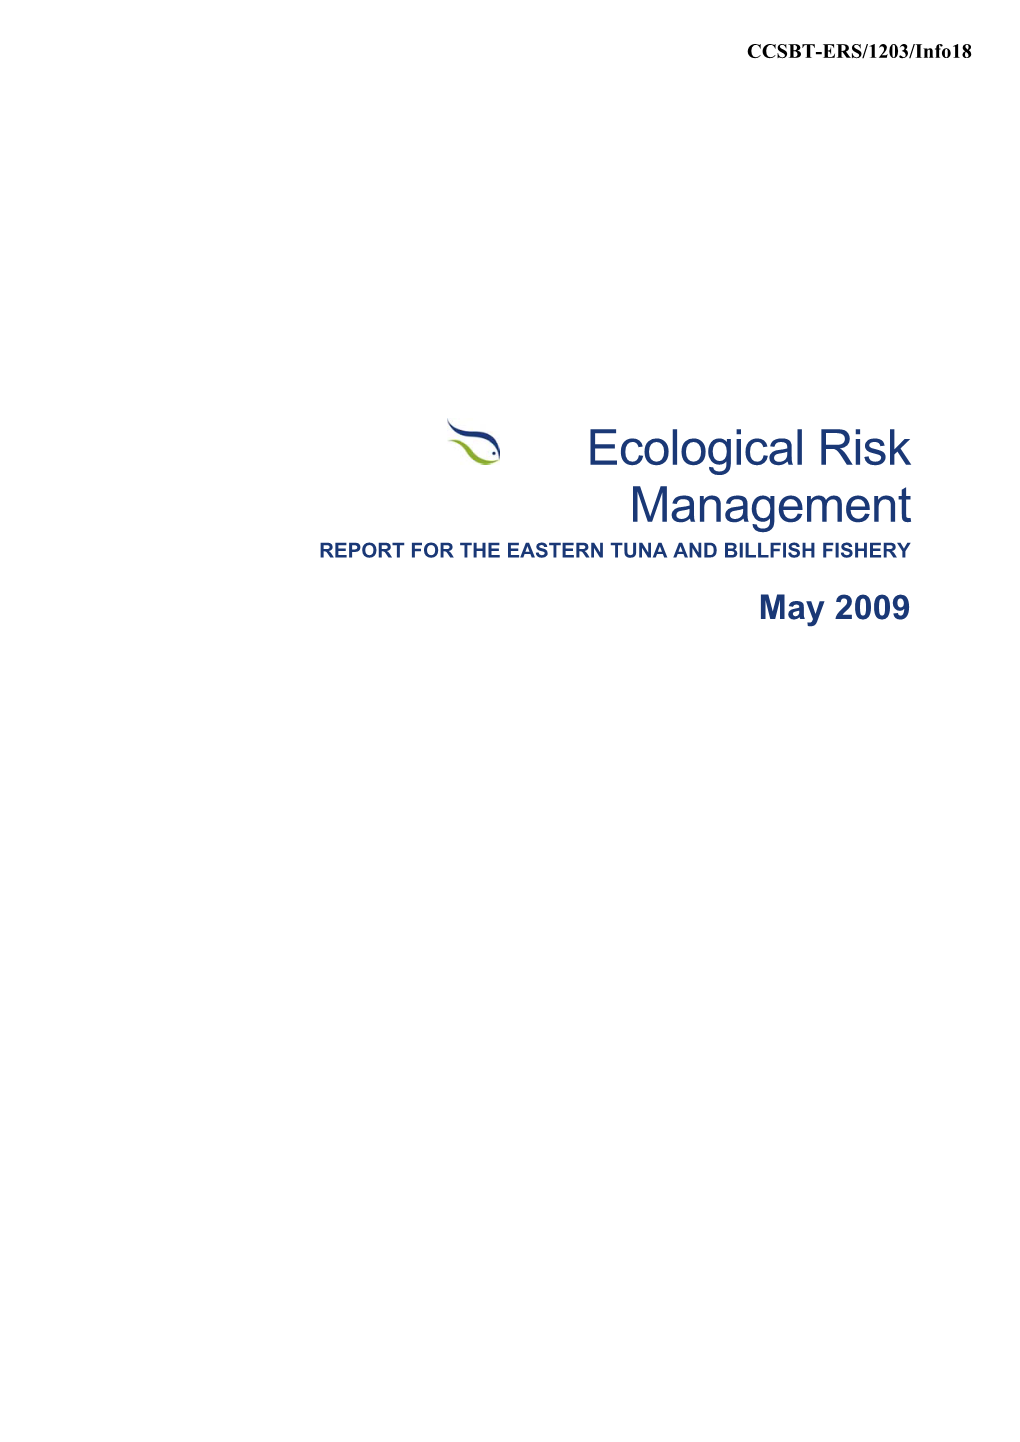 (Australia) Ecological Risk Management Report for The